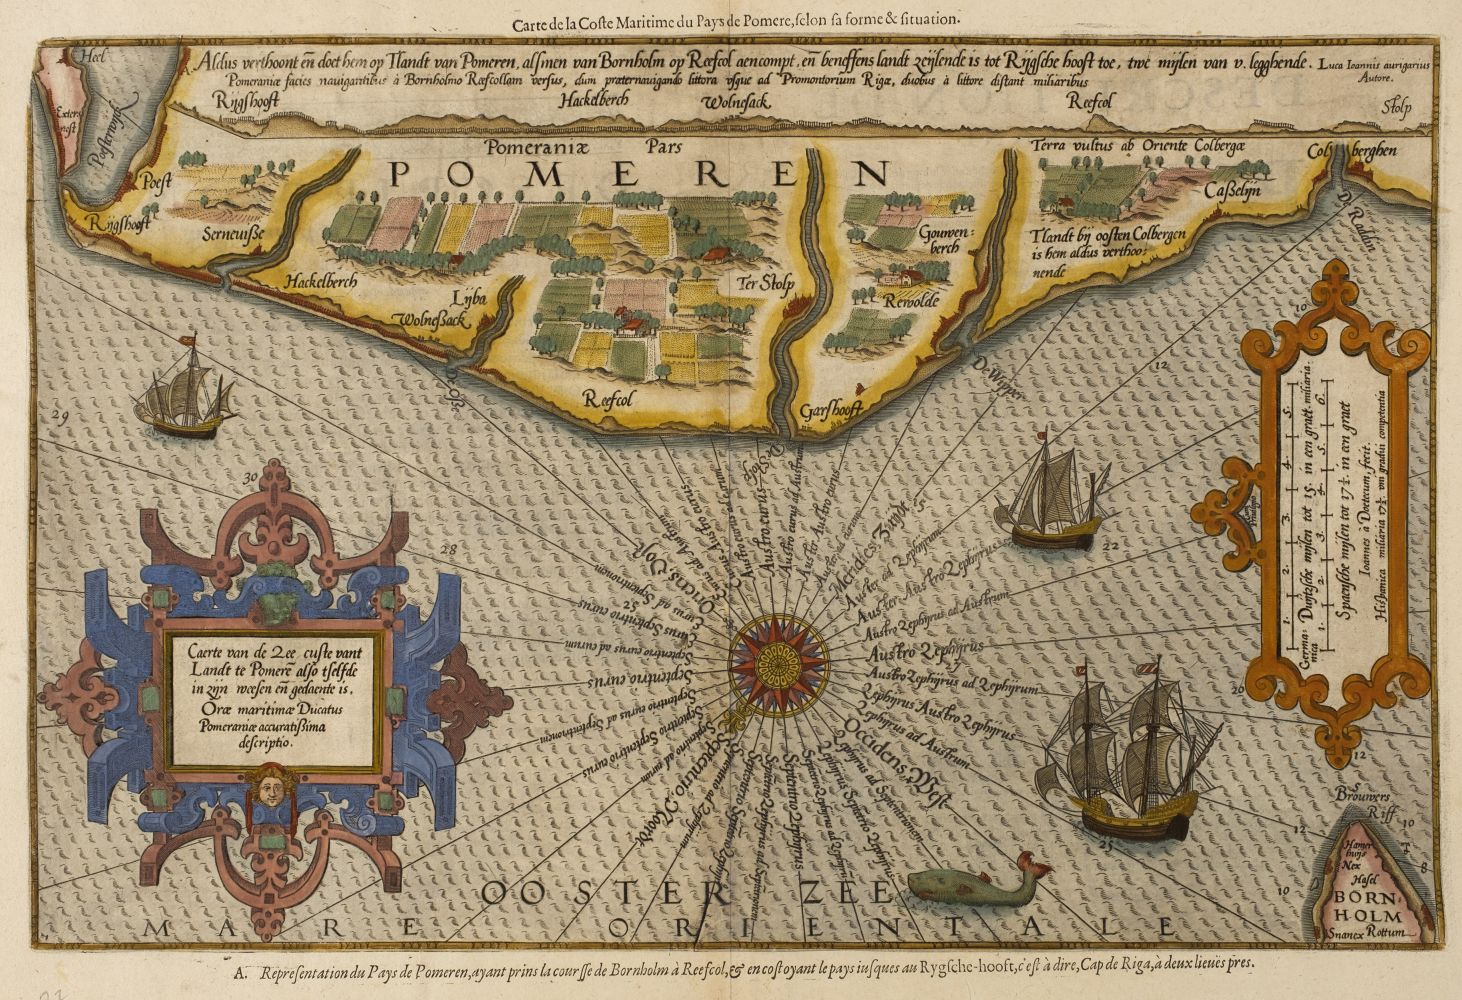 Pomerania. Waghenaer (L. J.), Caerte van de Zee Custe vant Landt te Pomere, circa 1600